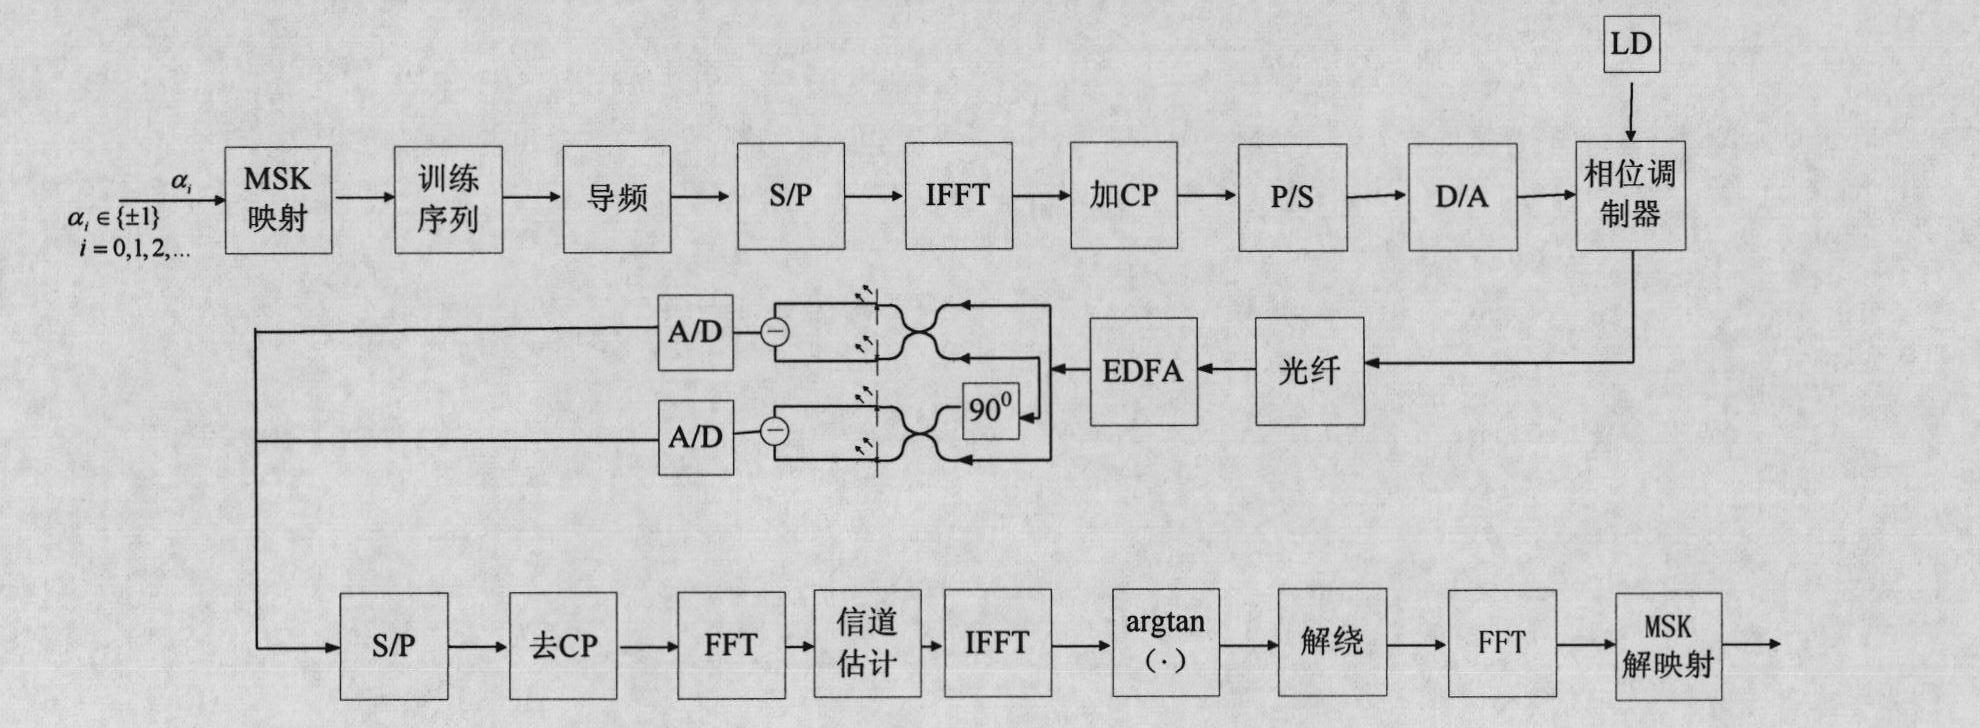 Constant-envelop light OFDM-MSK (orthogonal frequency division multiplexing-minimum shift keying) modulation method